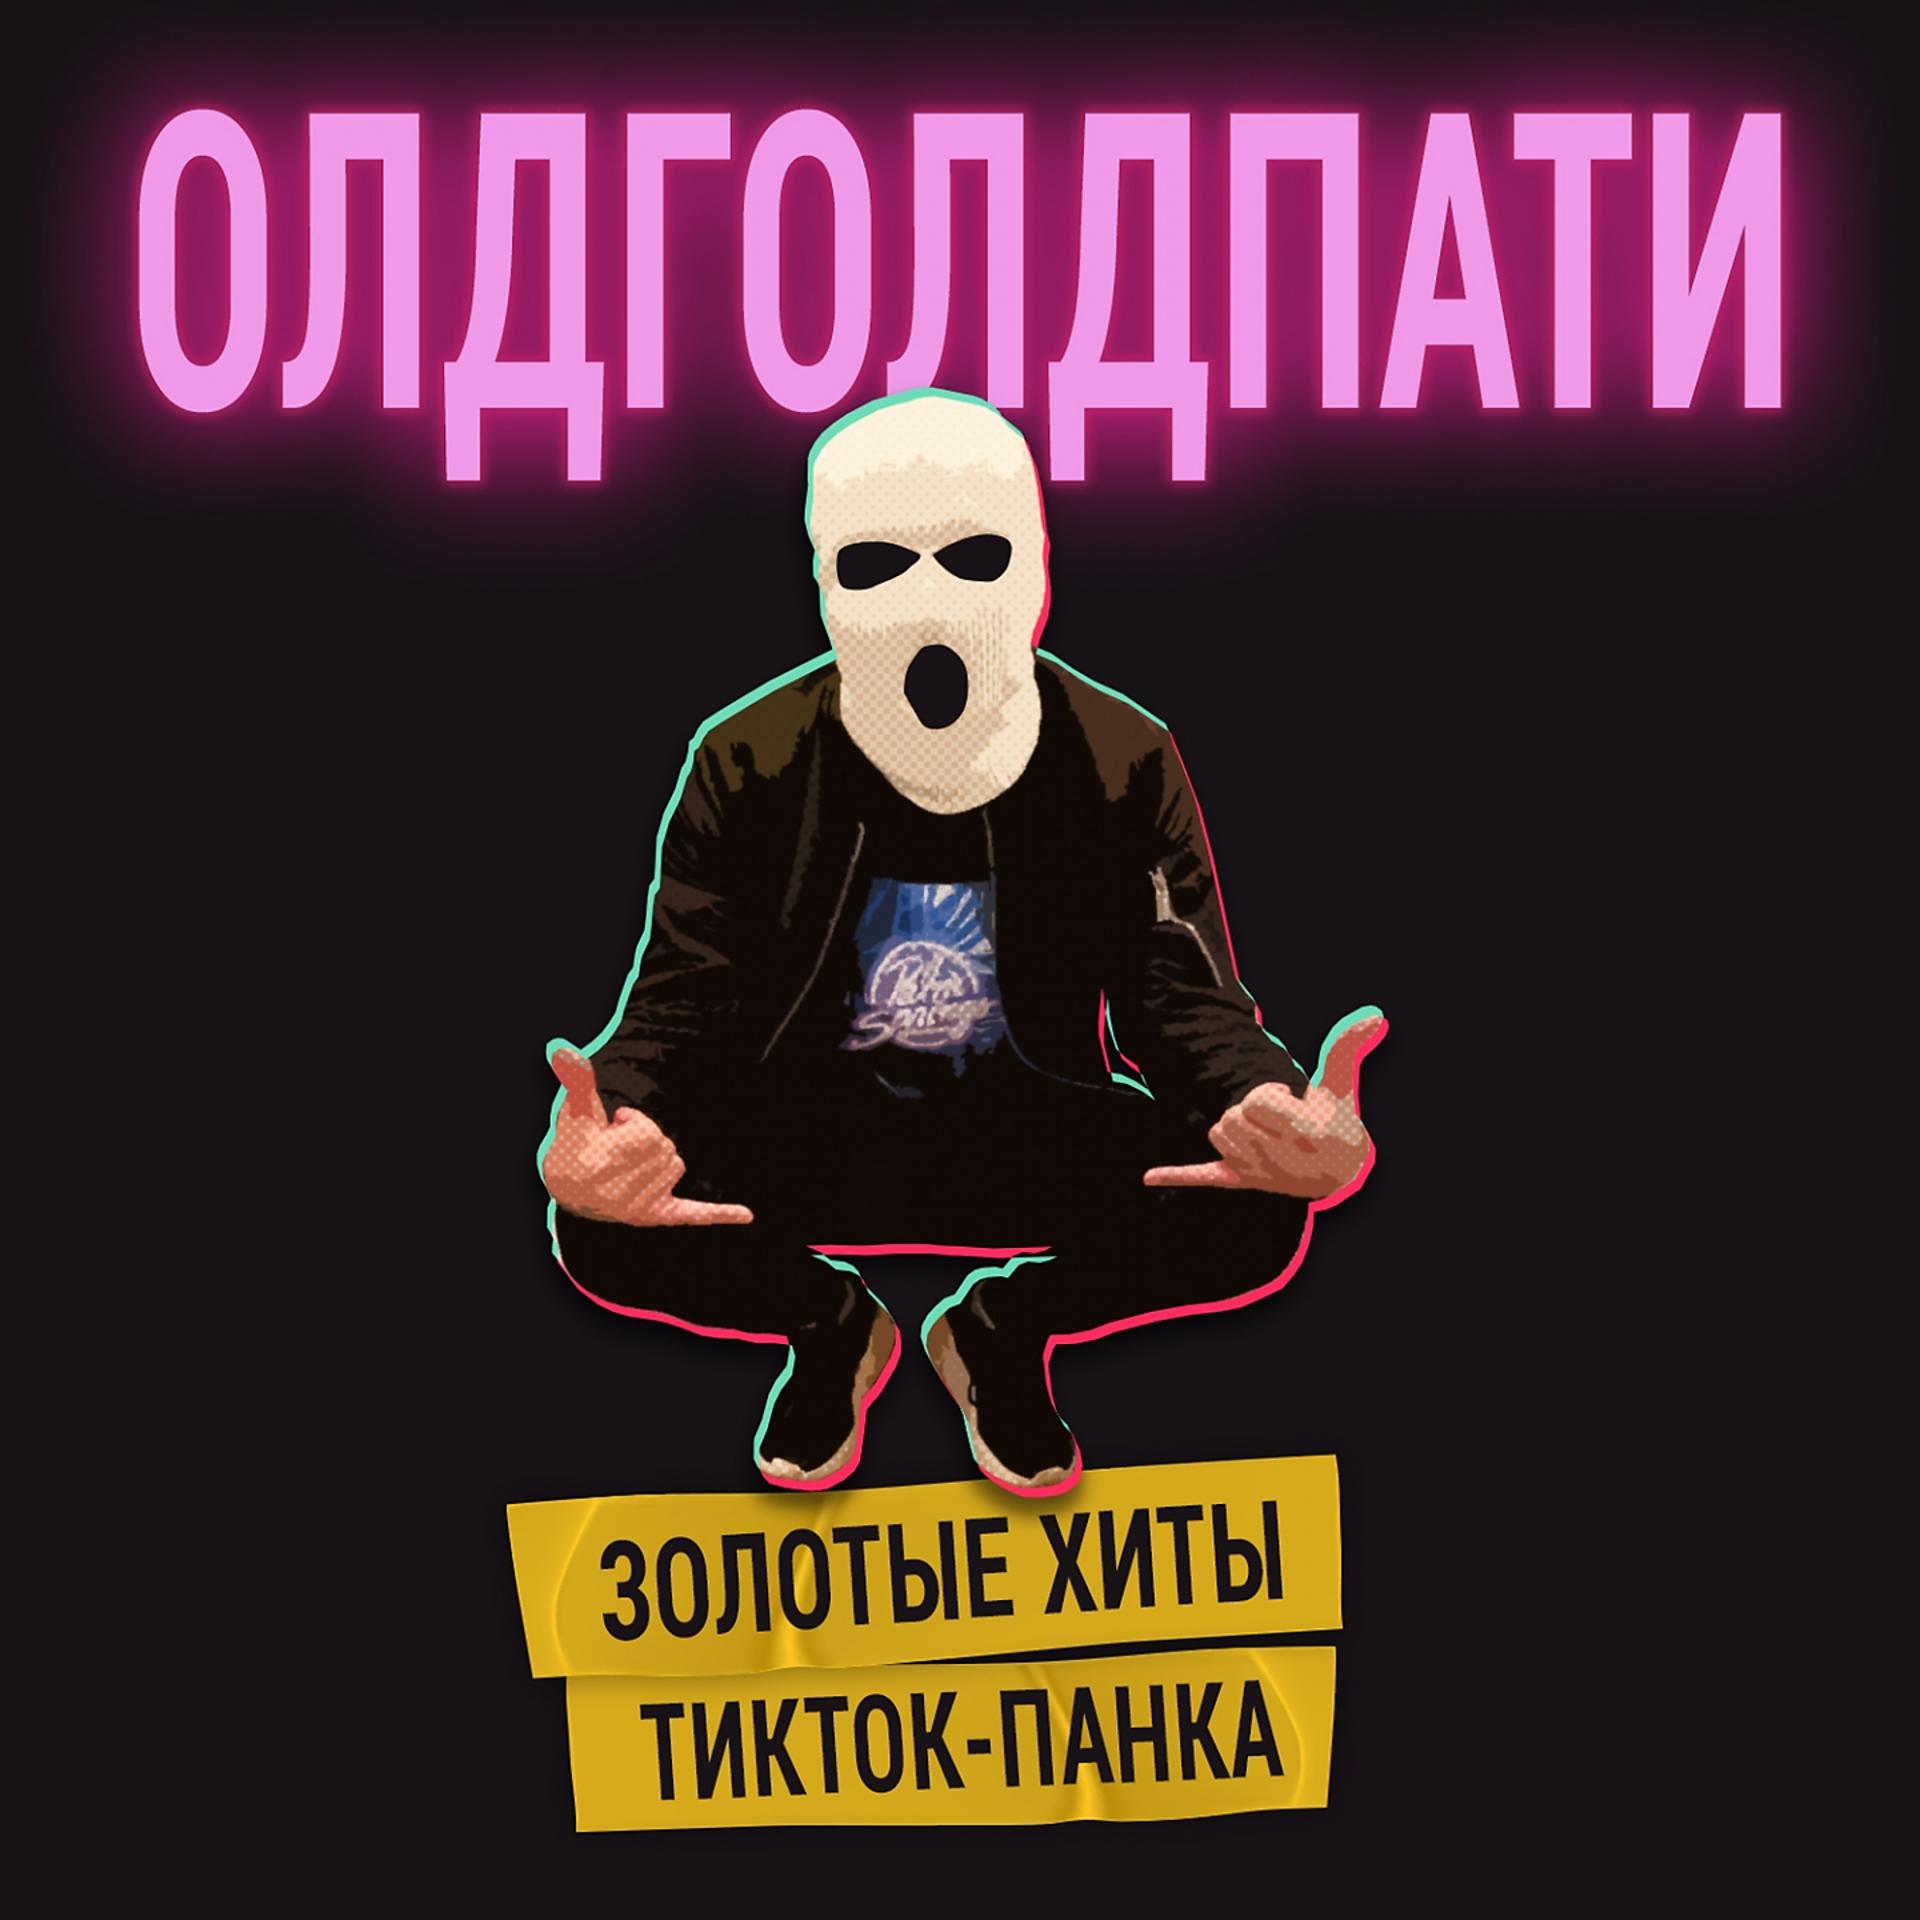 Постер к треку Олдголдпати - Космос